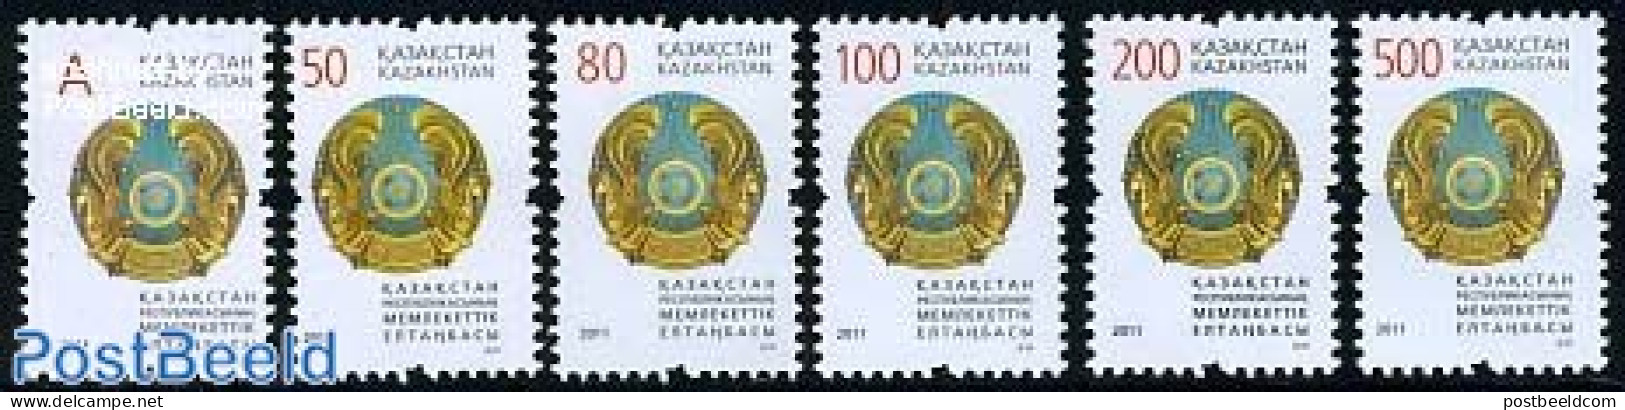 Kazakhstan 2011 Definitives, Coat Of Arms 6v, Mint NH, History - Coat Of Arms - Kazakistan